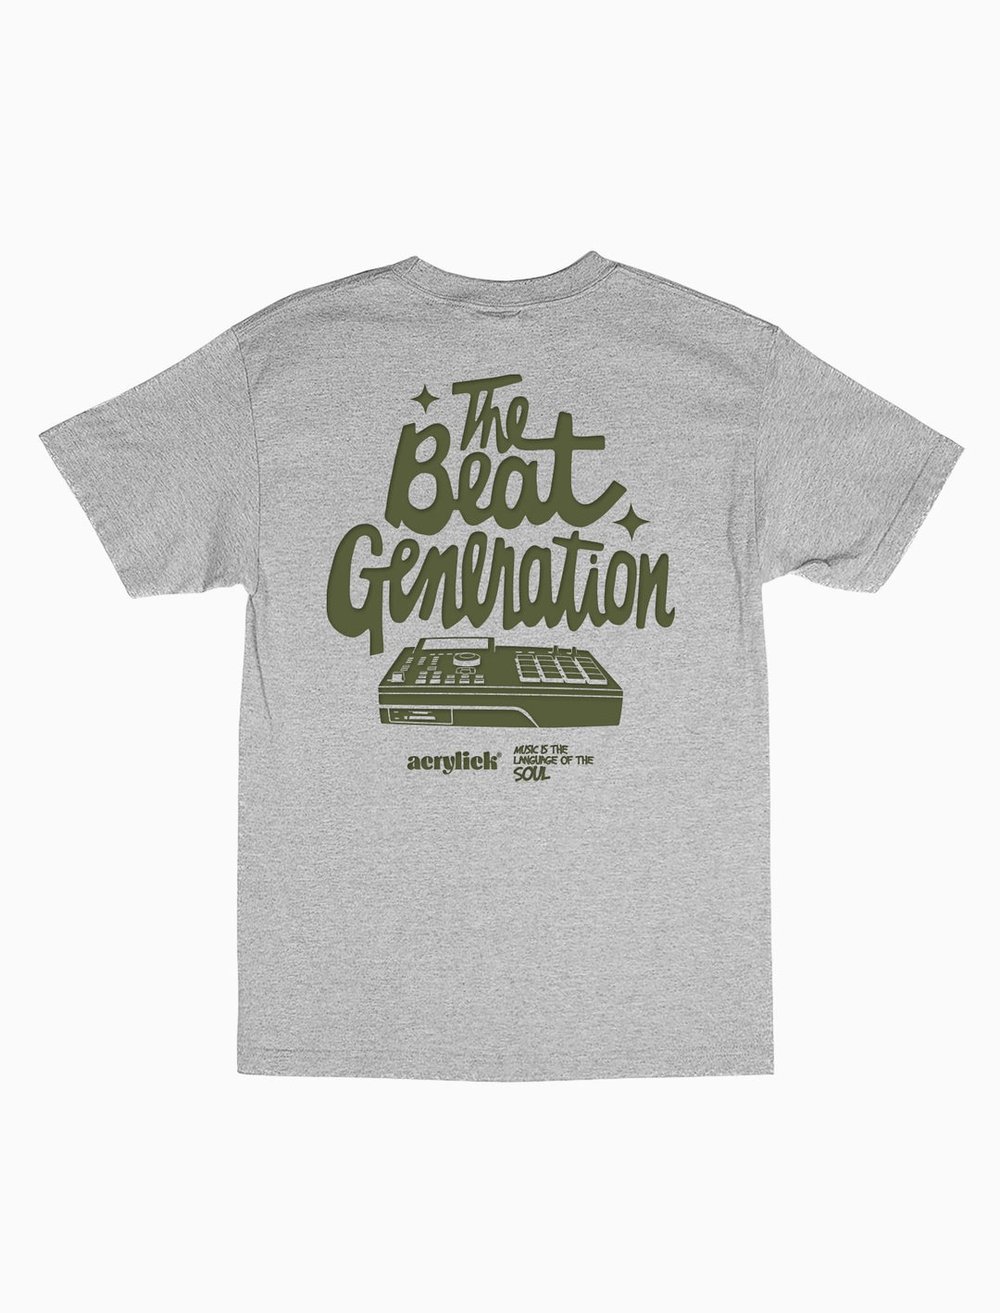 Acrylick Beat Generation Tshirt